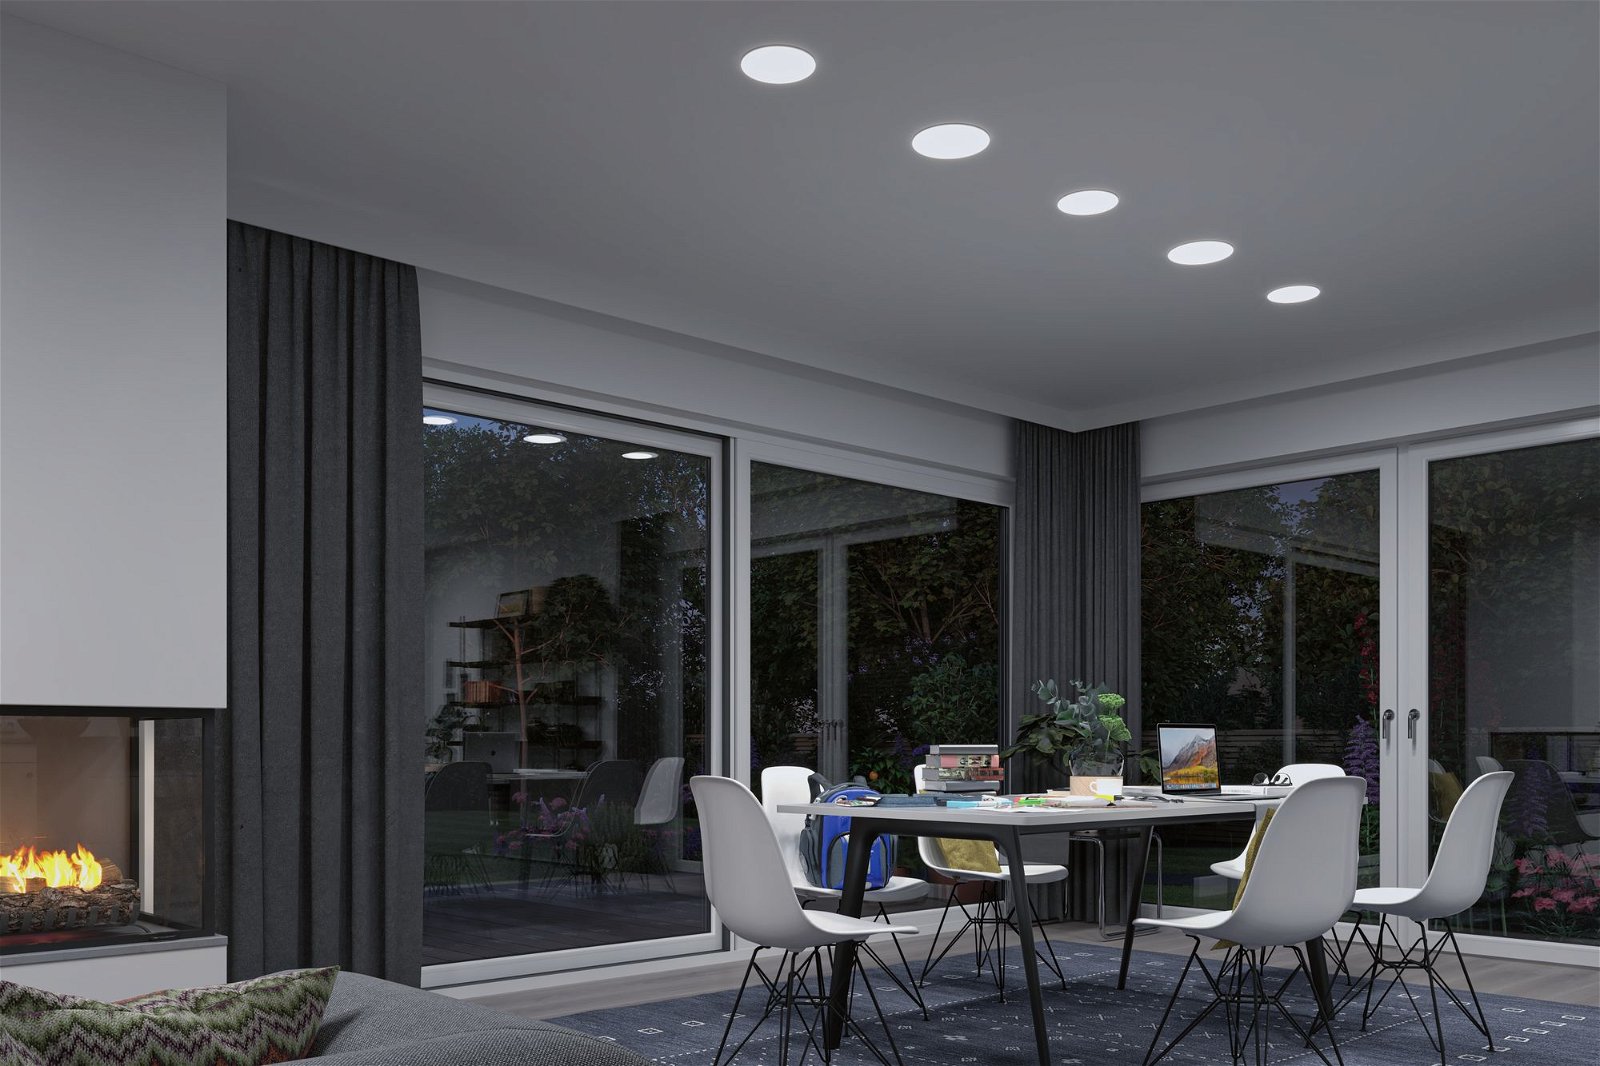 VariFit LED Einbaupanel Smart Home Zigbee Veluna IP44 rund 215mm 17W 1300lm Tunable White Satin dimmbar